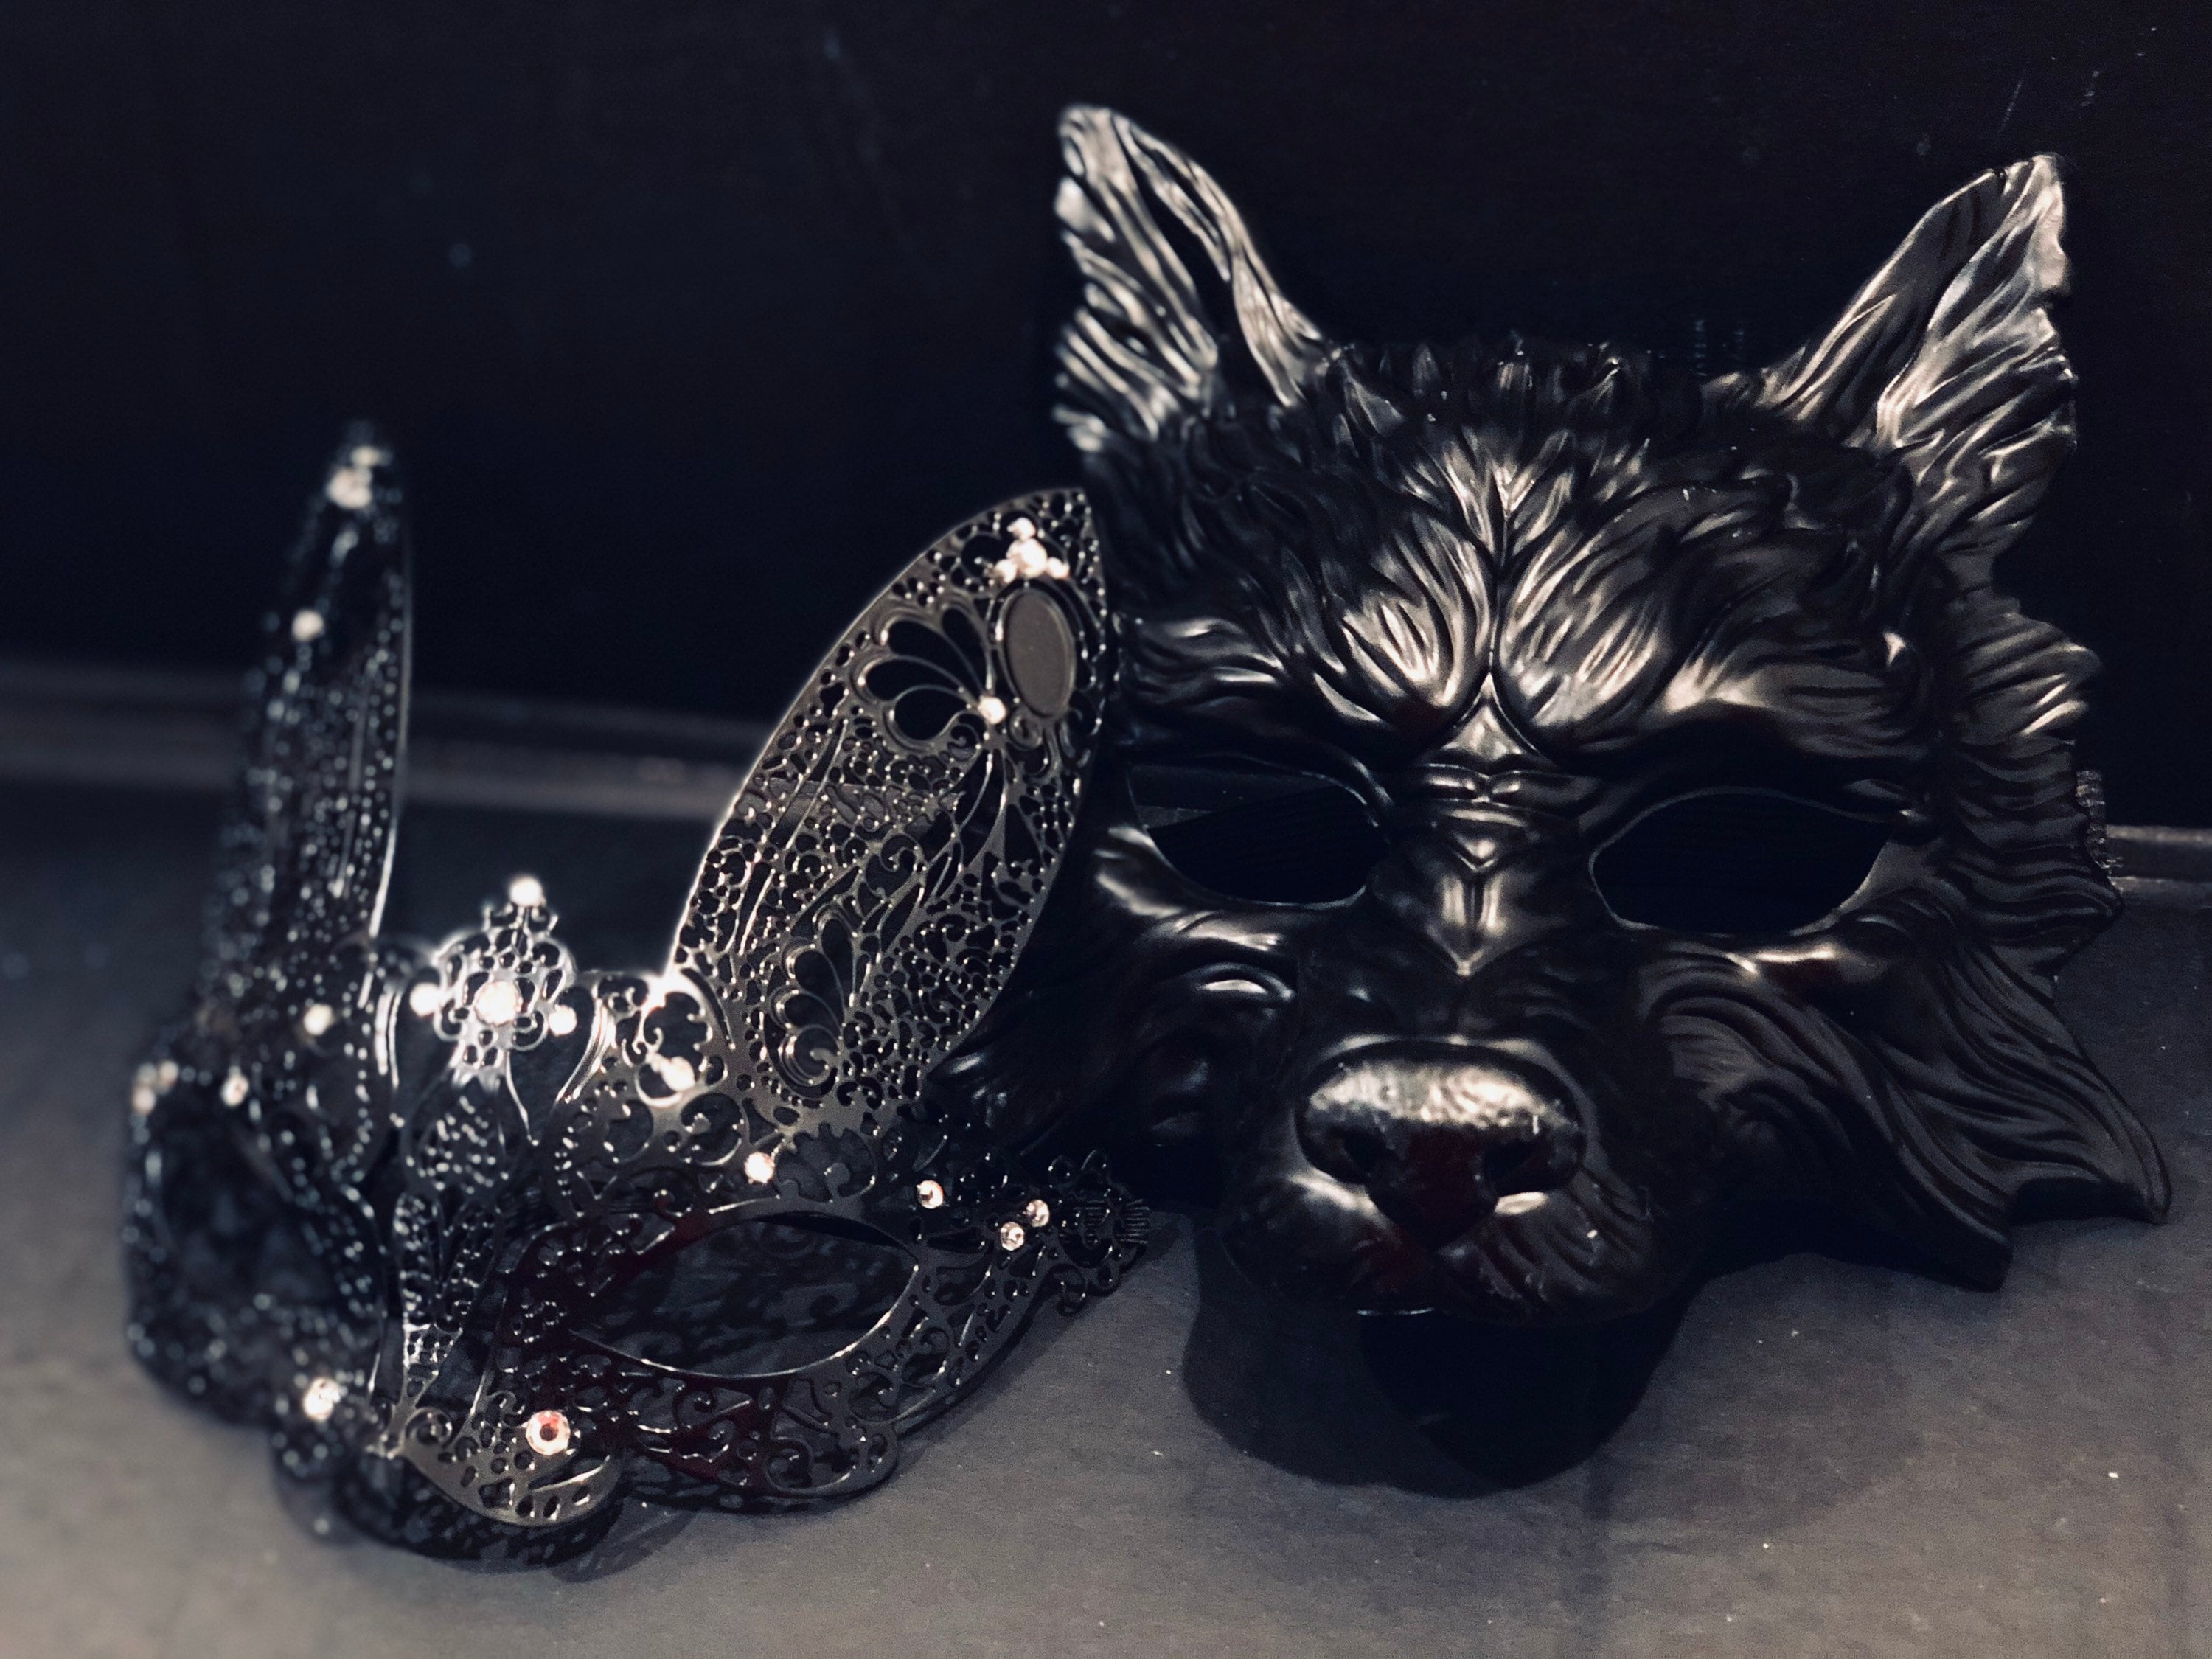 Animal Masks - Wolf Mask - Chinless Mask - MASKS Masquerade